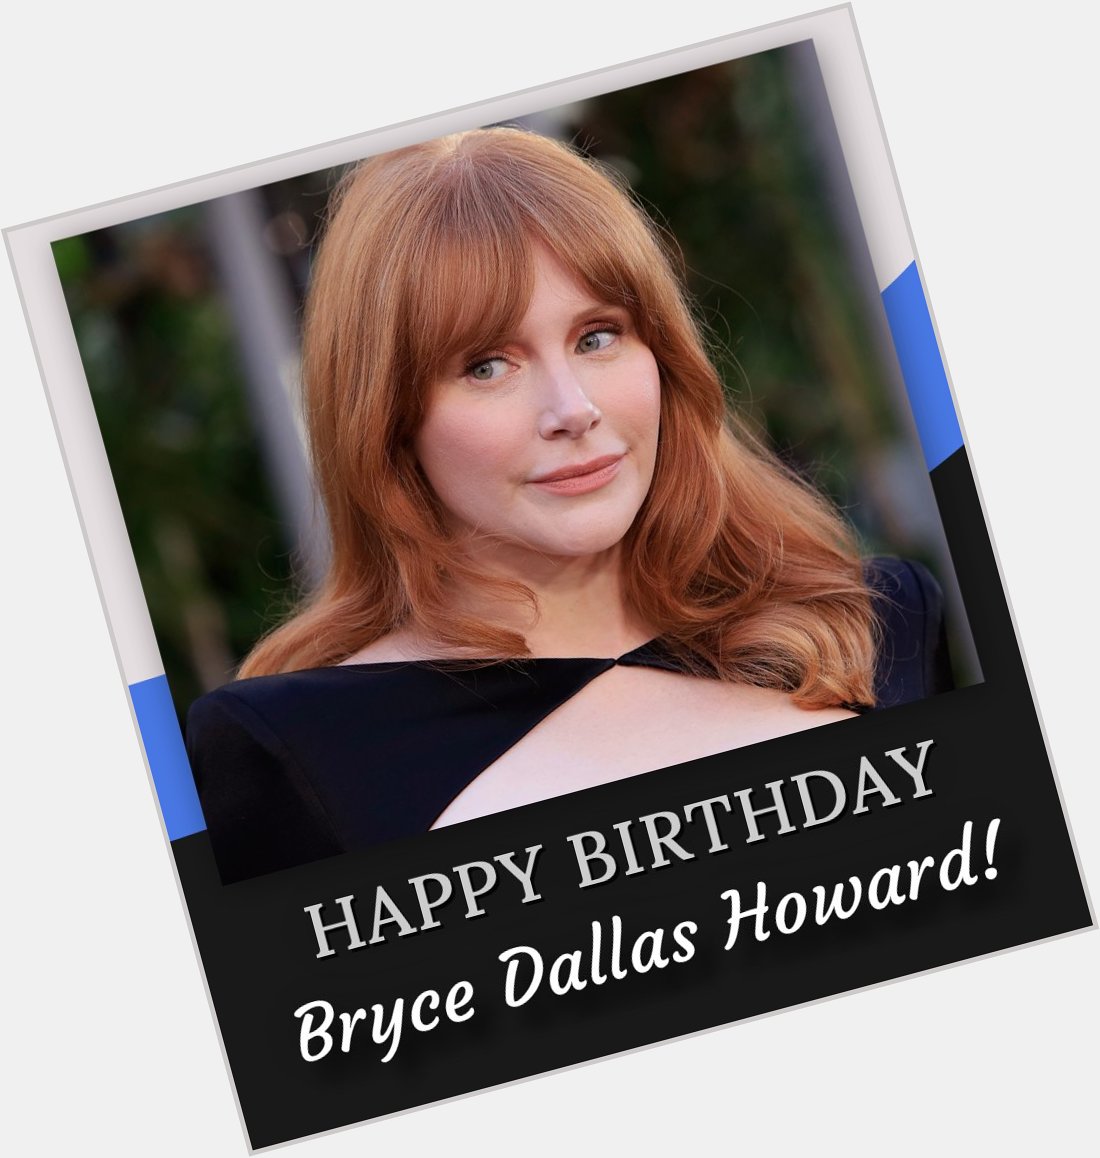 Happy birthday Bryce Dallas Howard! 